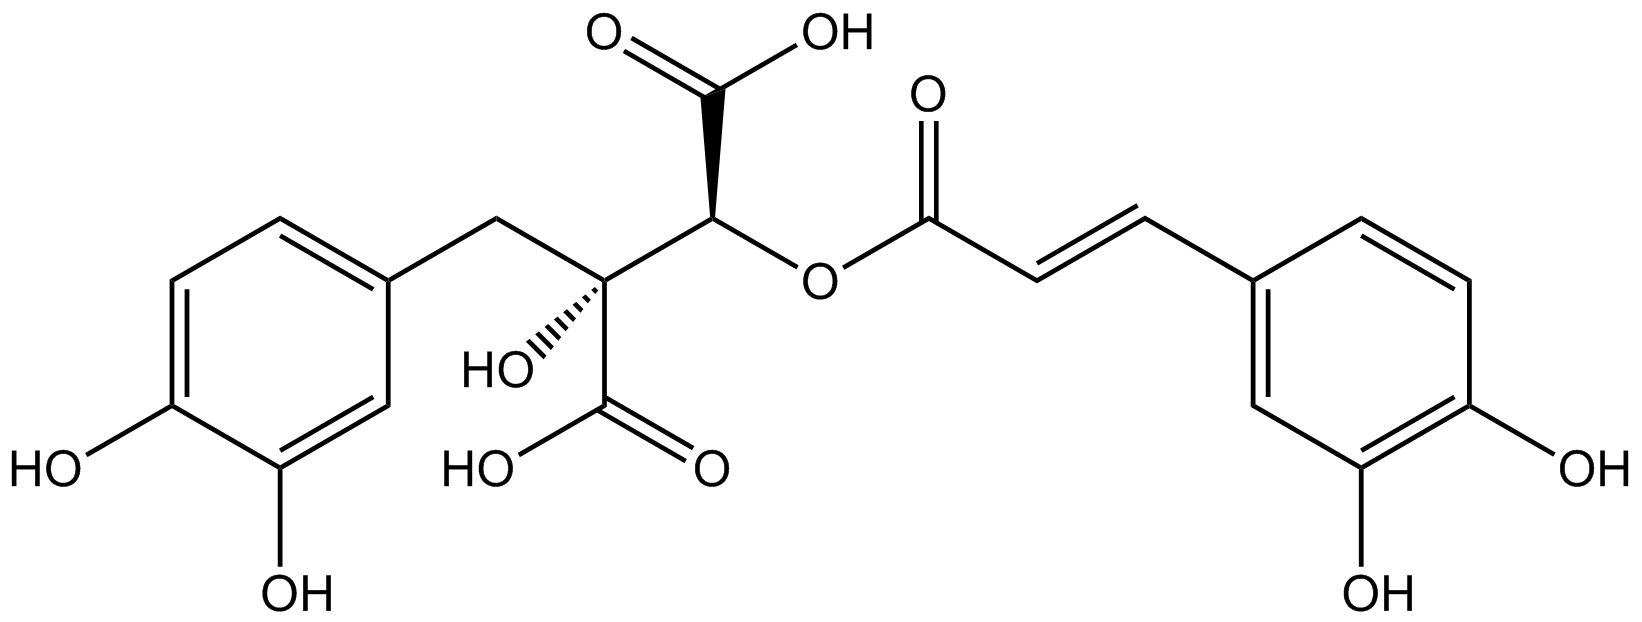 Fukinolsäure phyproof® Referenzsubstanz | PhytoLab